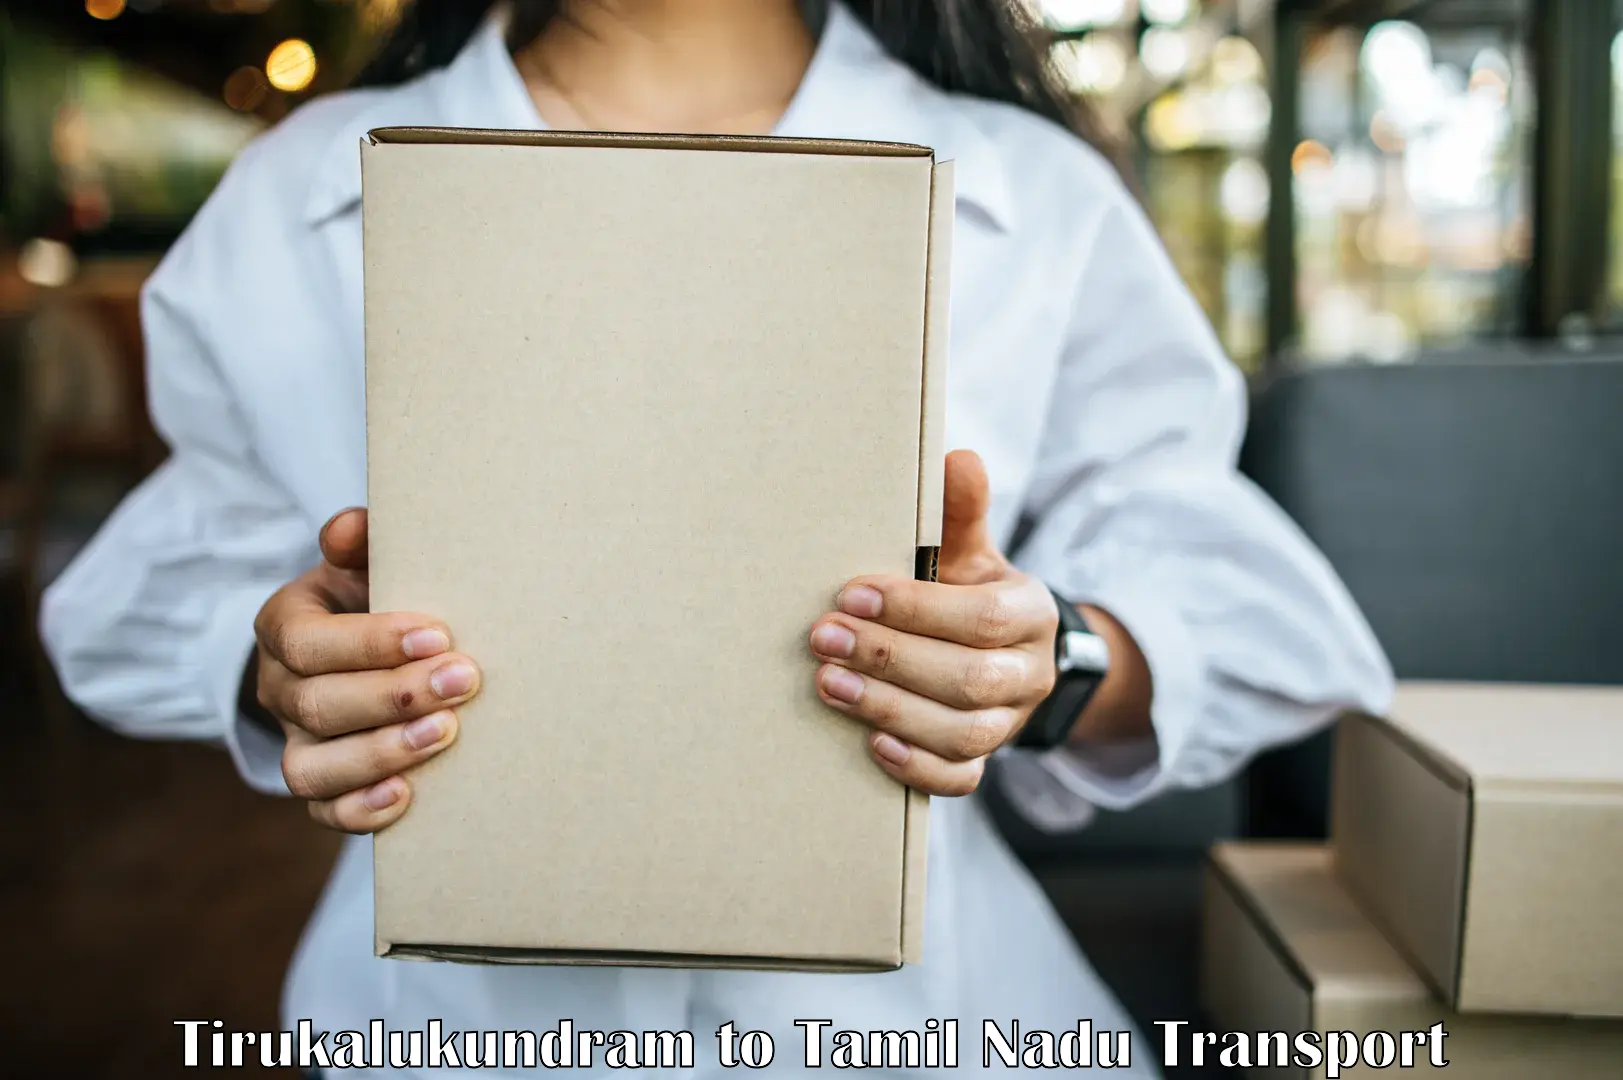 Online transport booking in Tirukalukundram to Nilgiris